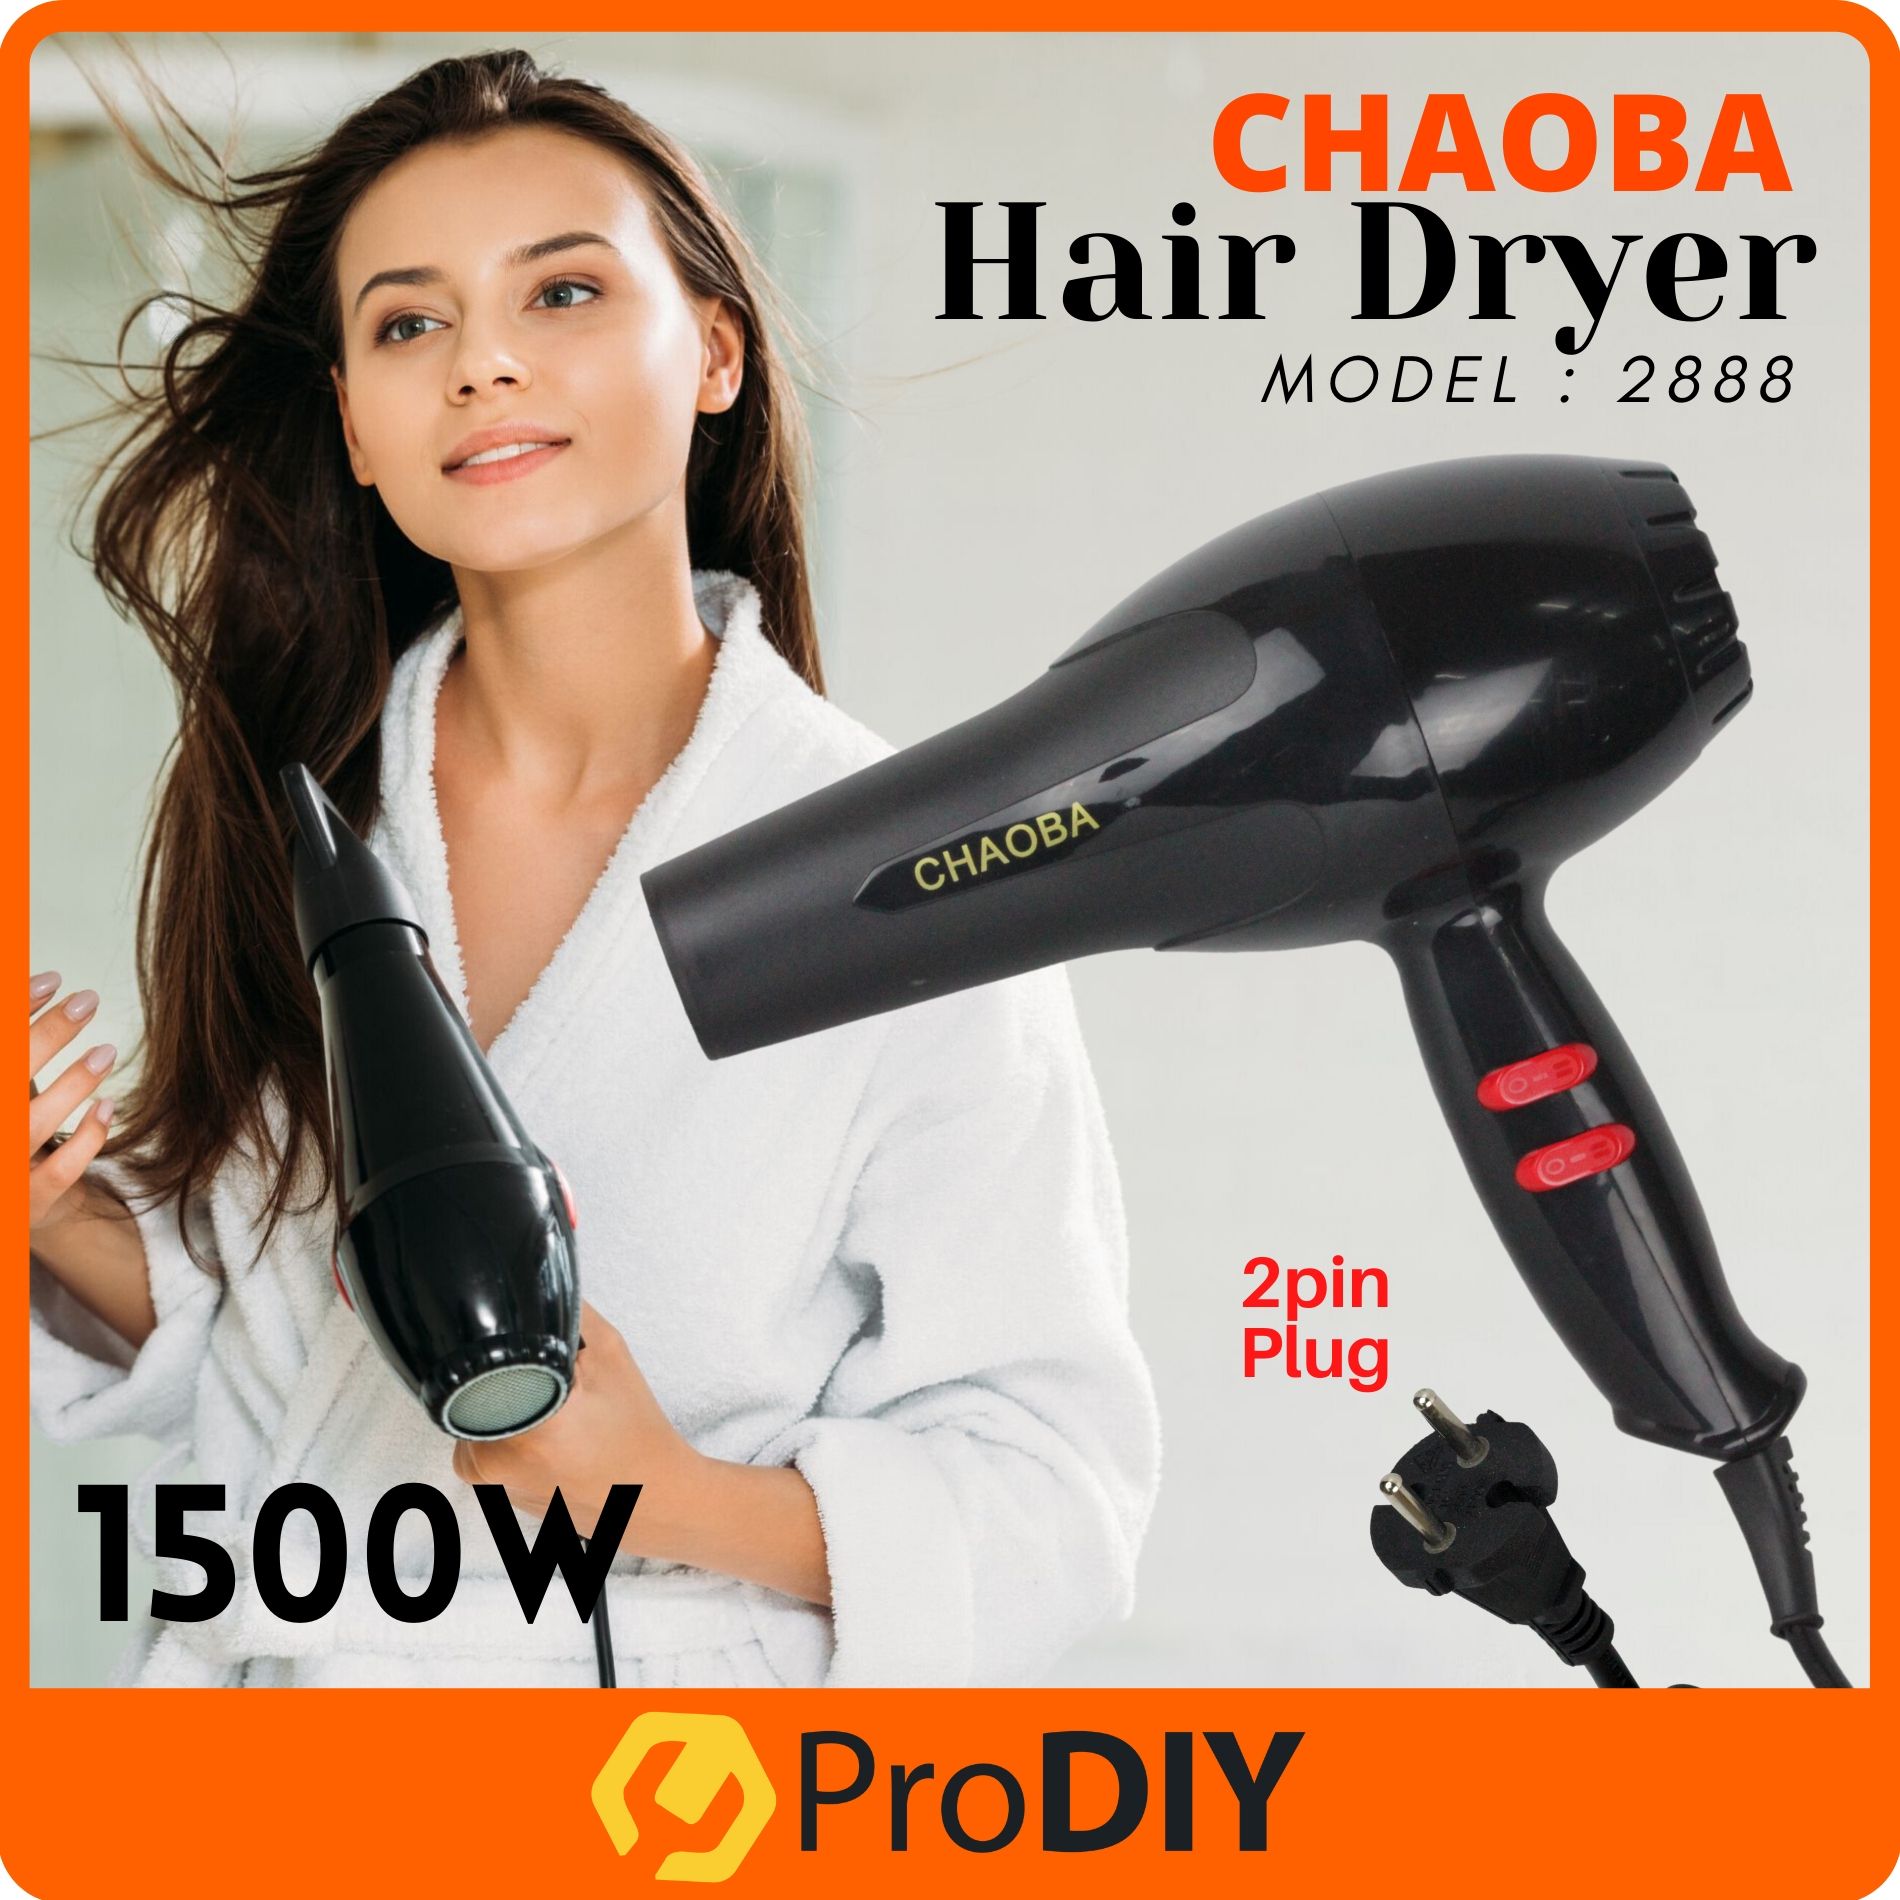 CHAOBA Professional Salon Saloon Hair Dryer Fashion 2 Speed Pengering Kering Rambut 1500W ( 2888 )